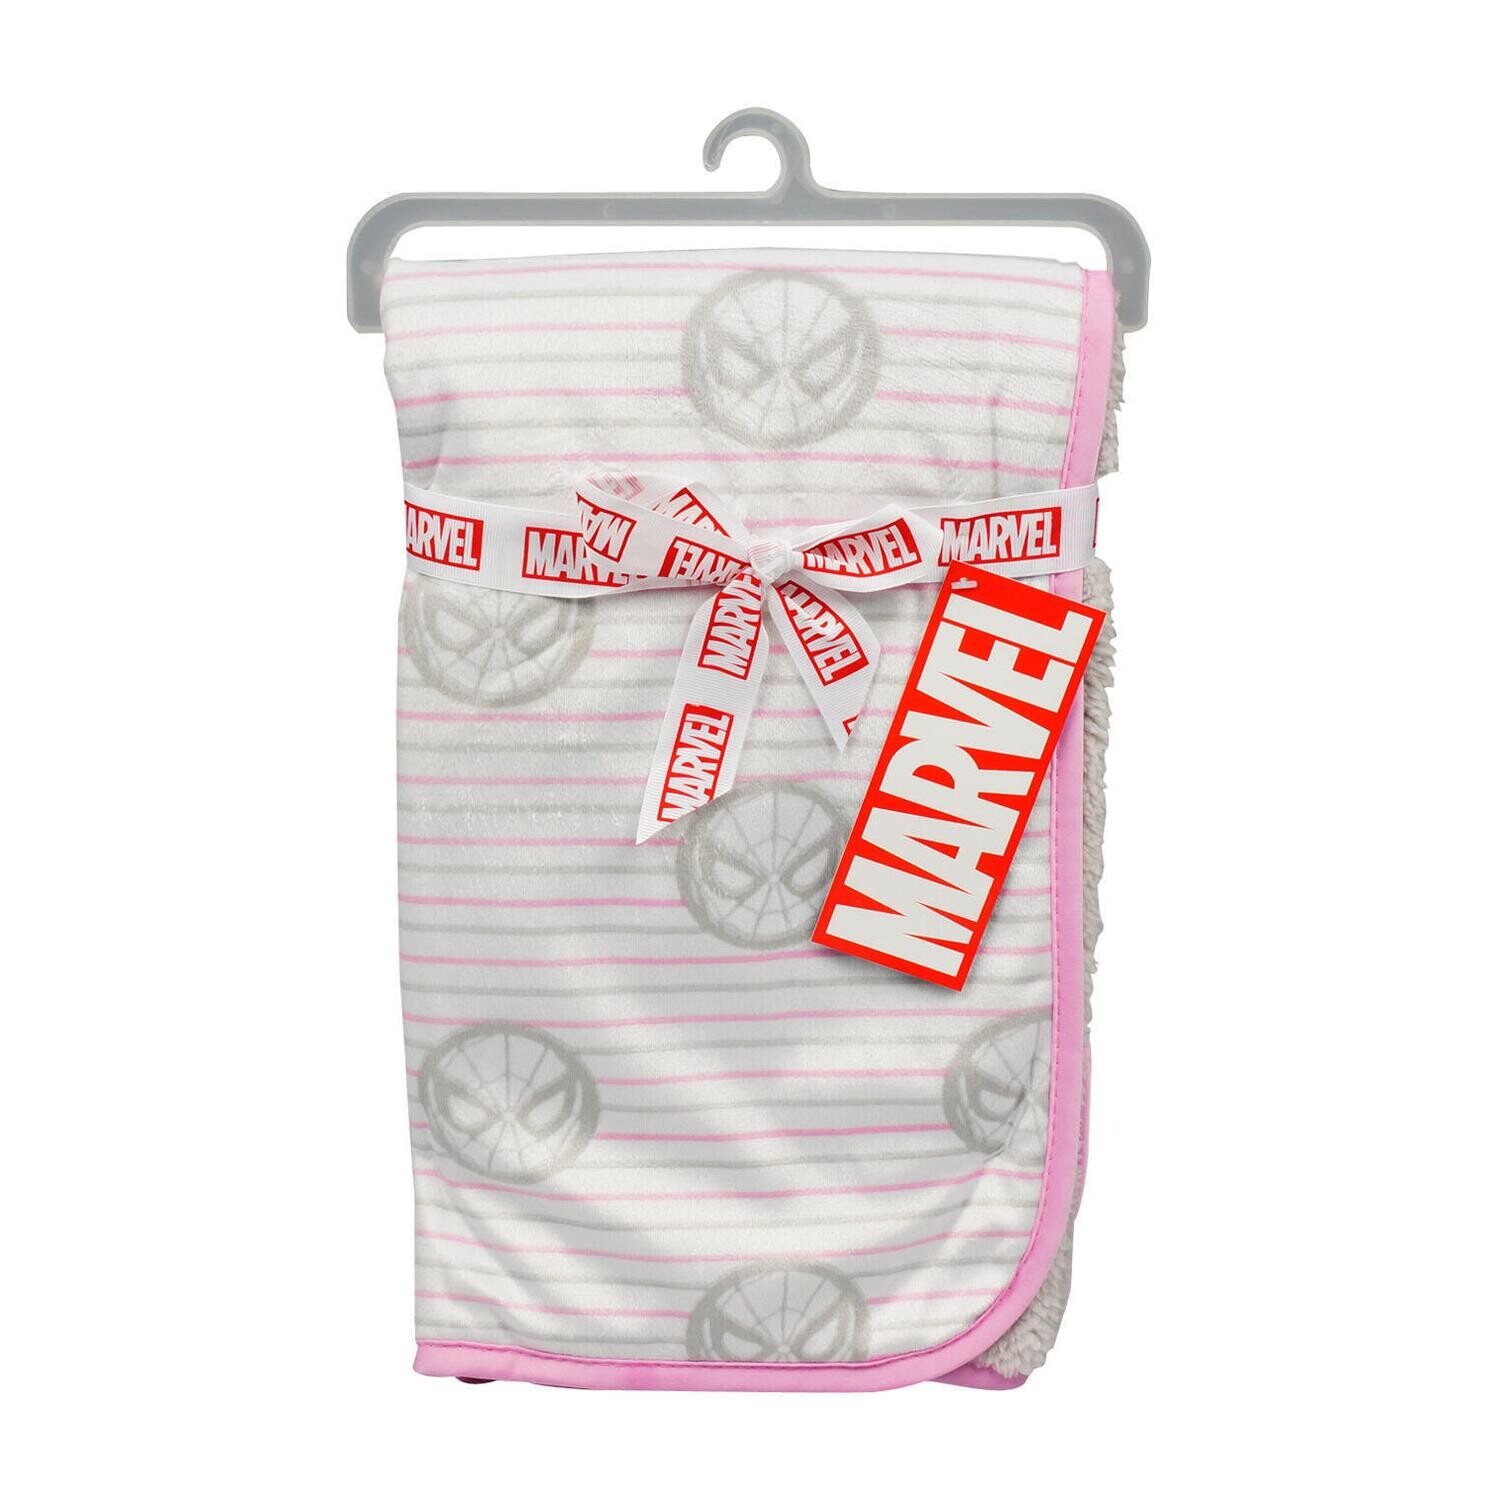 . Case of [24] Baby Girls' Baby Blanket - Pink & Grey, Marvel Spiderman .